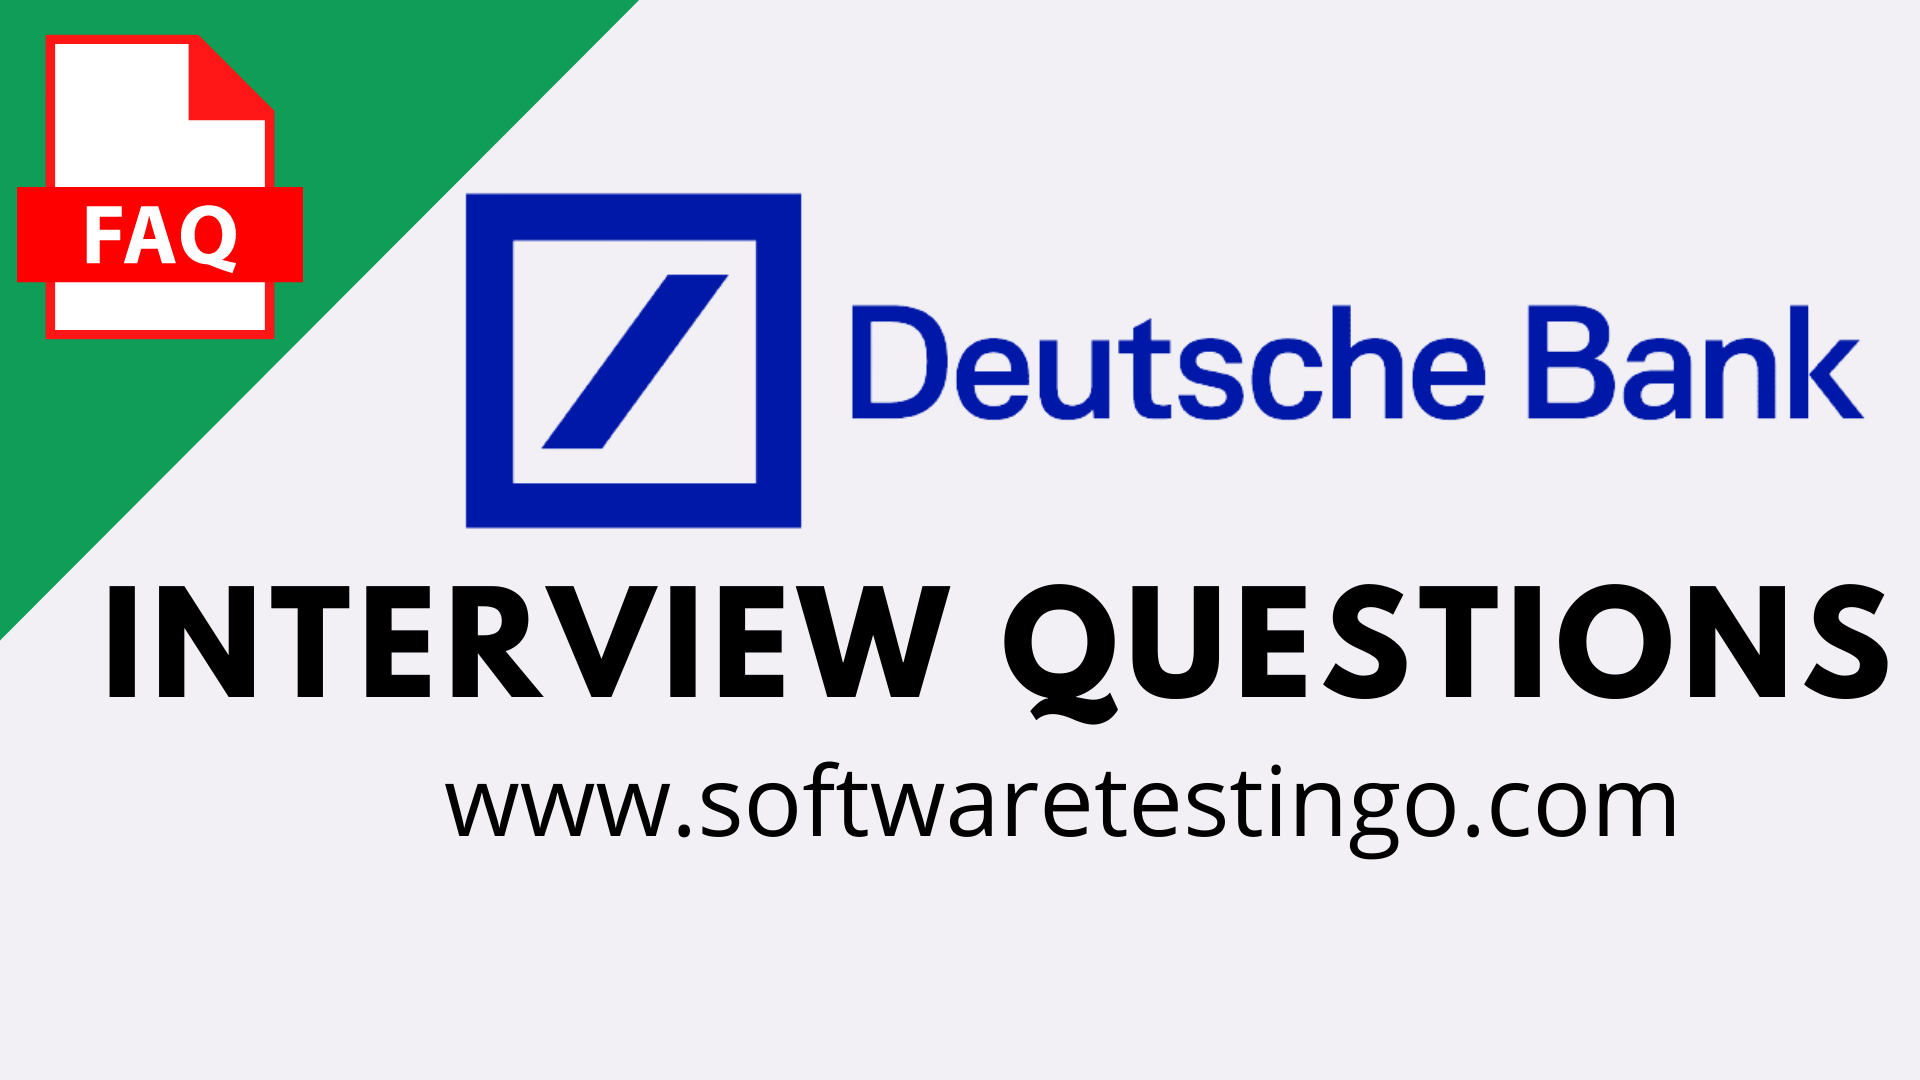 Deutsche Bank Interview Questions